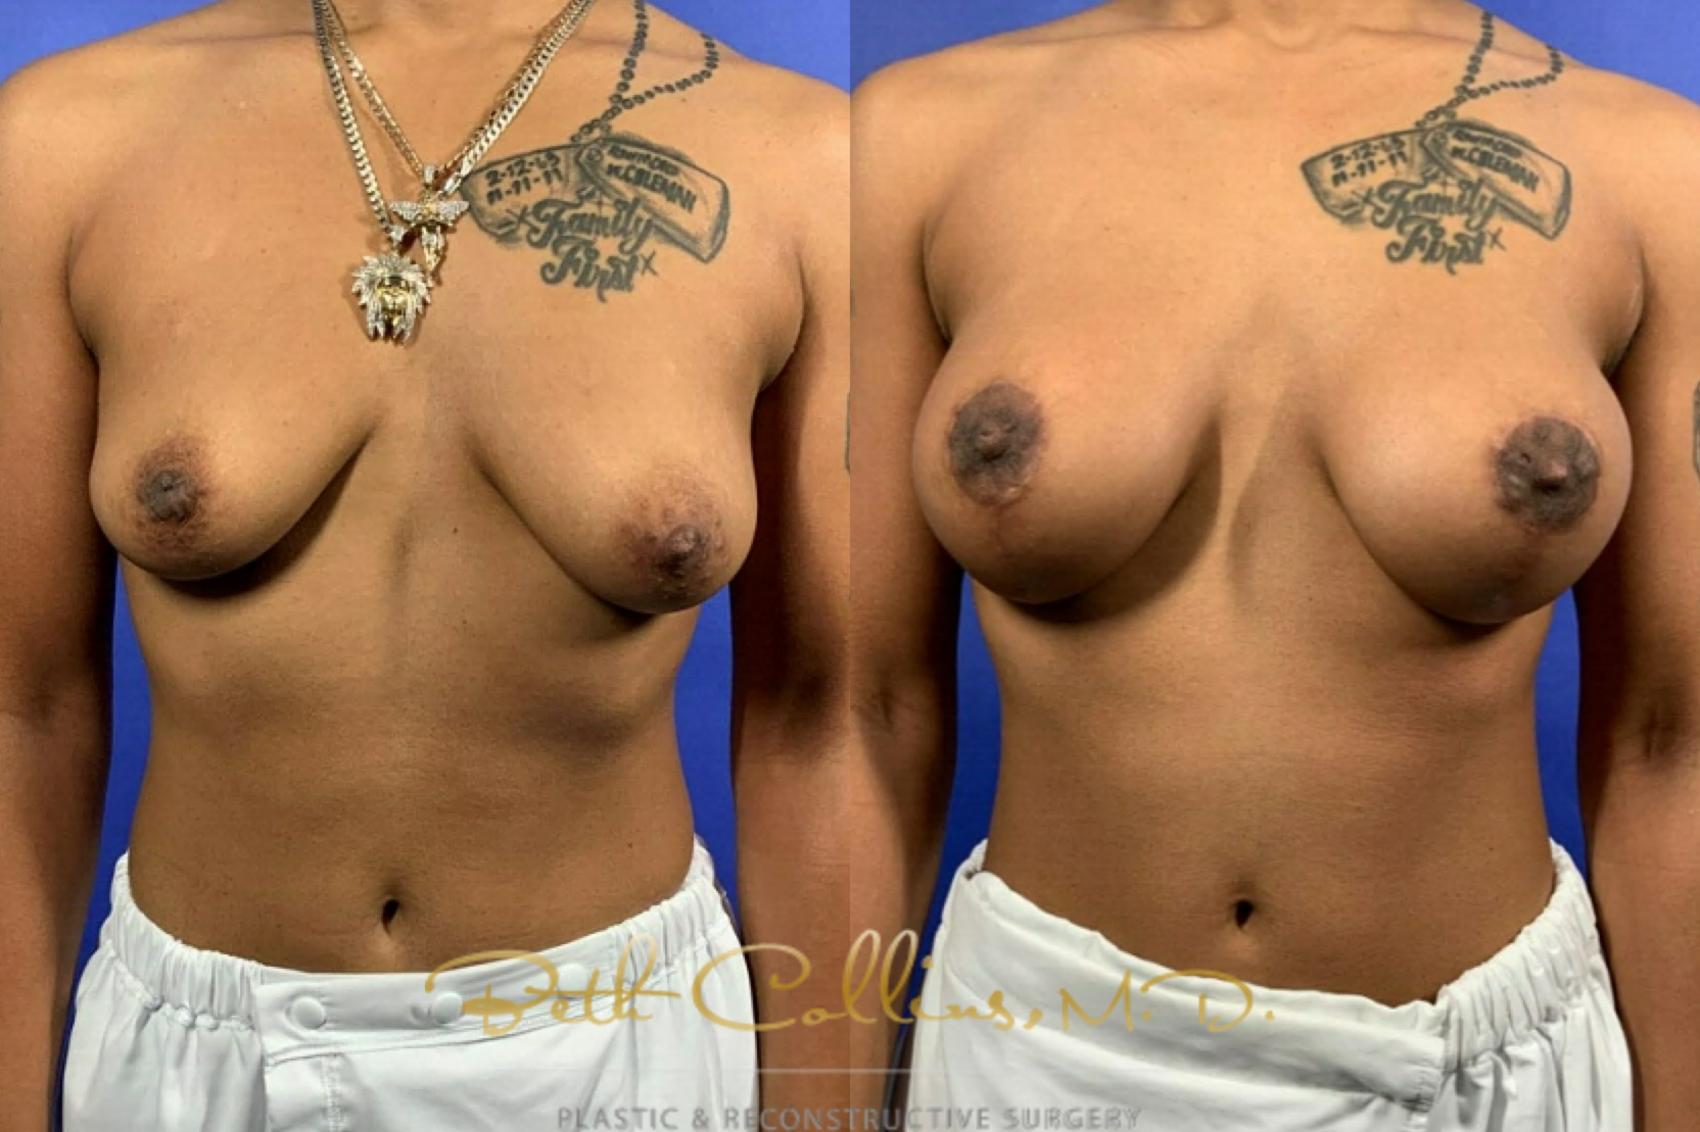 Breast augmentation with mastopexy